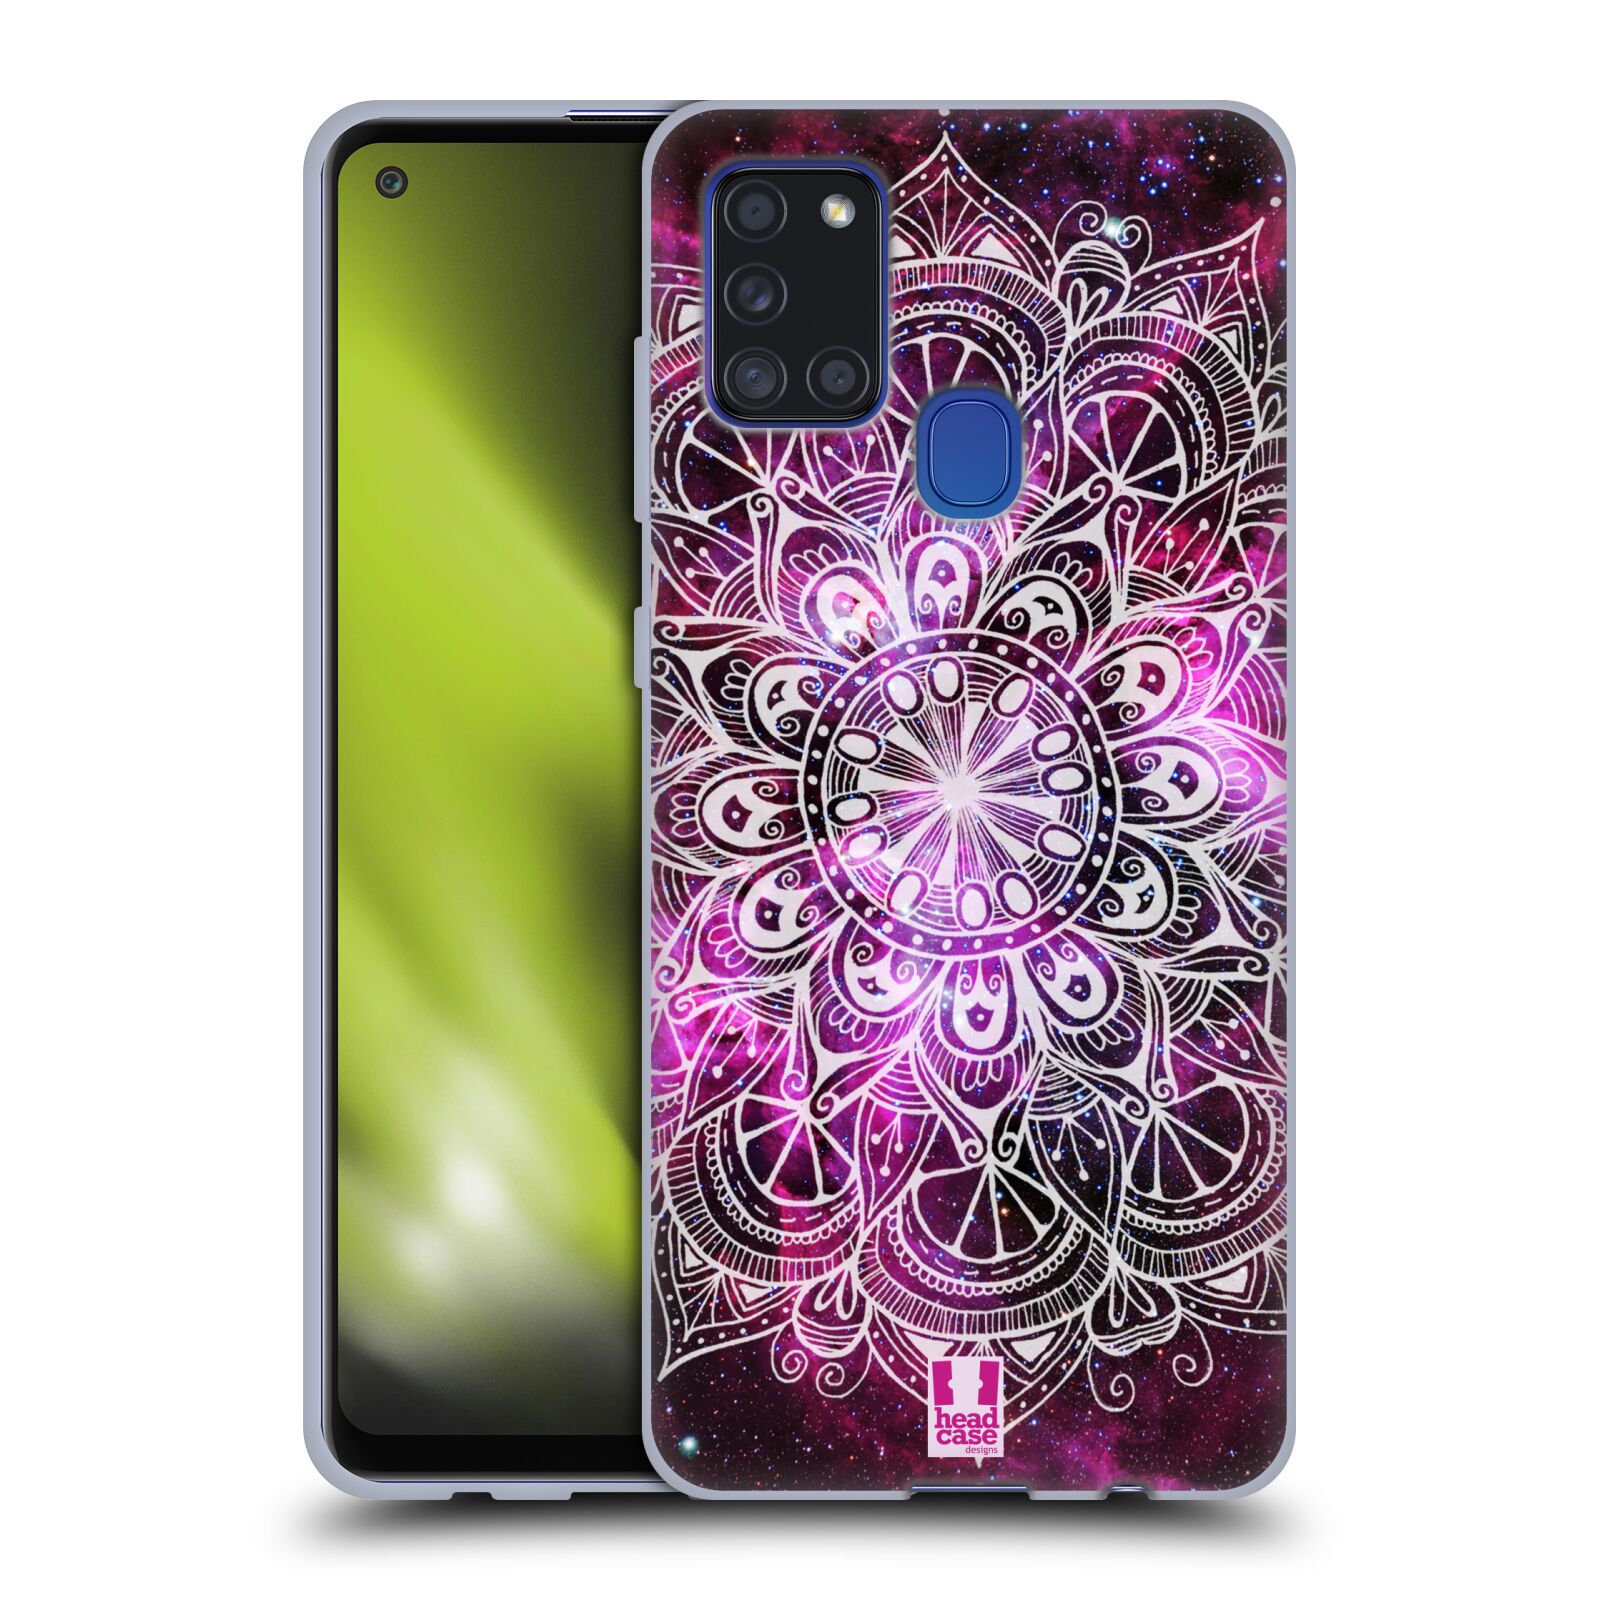 Silikonové pouzdro na mobil Samsung Galaxy A21s - Head Case - Mandala Doodle Nebula (Silikonový kryt, obal, pouzdro na mobilní telefon Samsung Galaxy A21s SM-A217F s motivem Mandala Doodle Nebula)